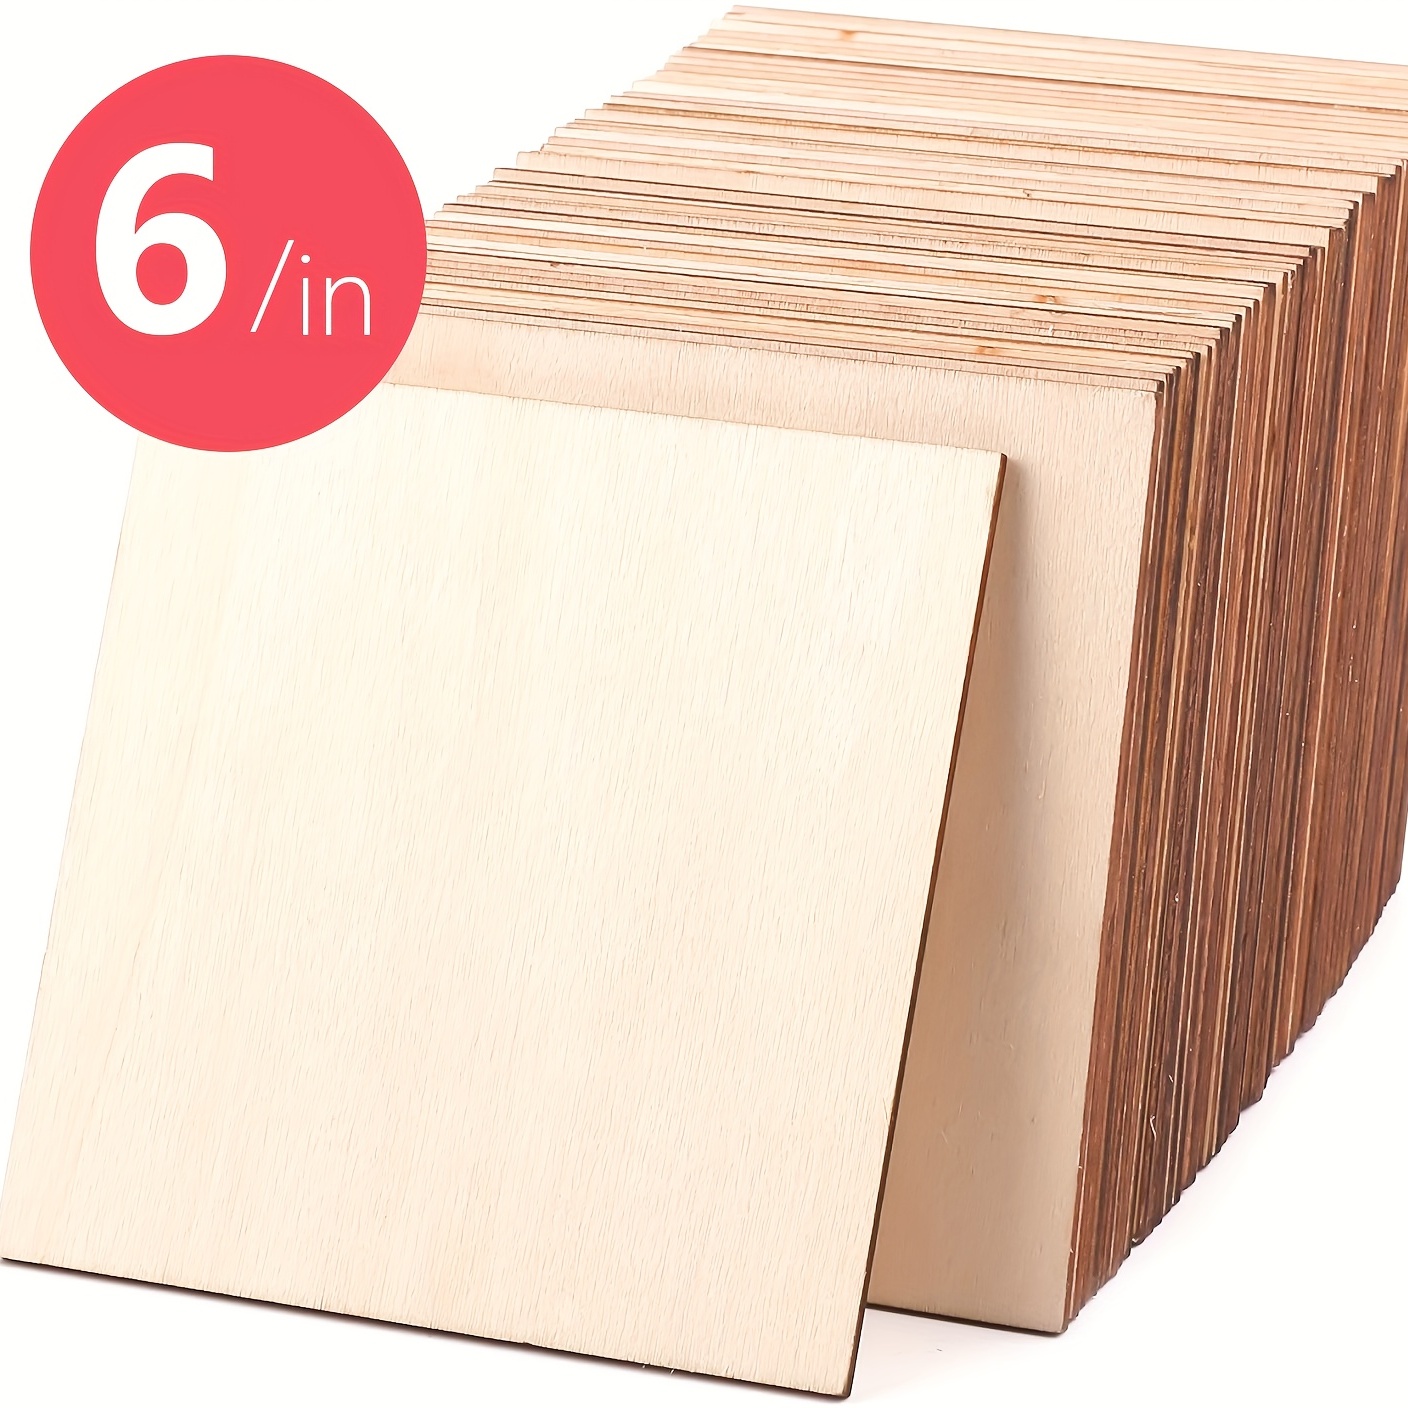 Tableros de madera finos de roble blanco para manualidades de madera de 1/4  x 6 x 24